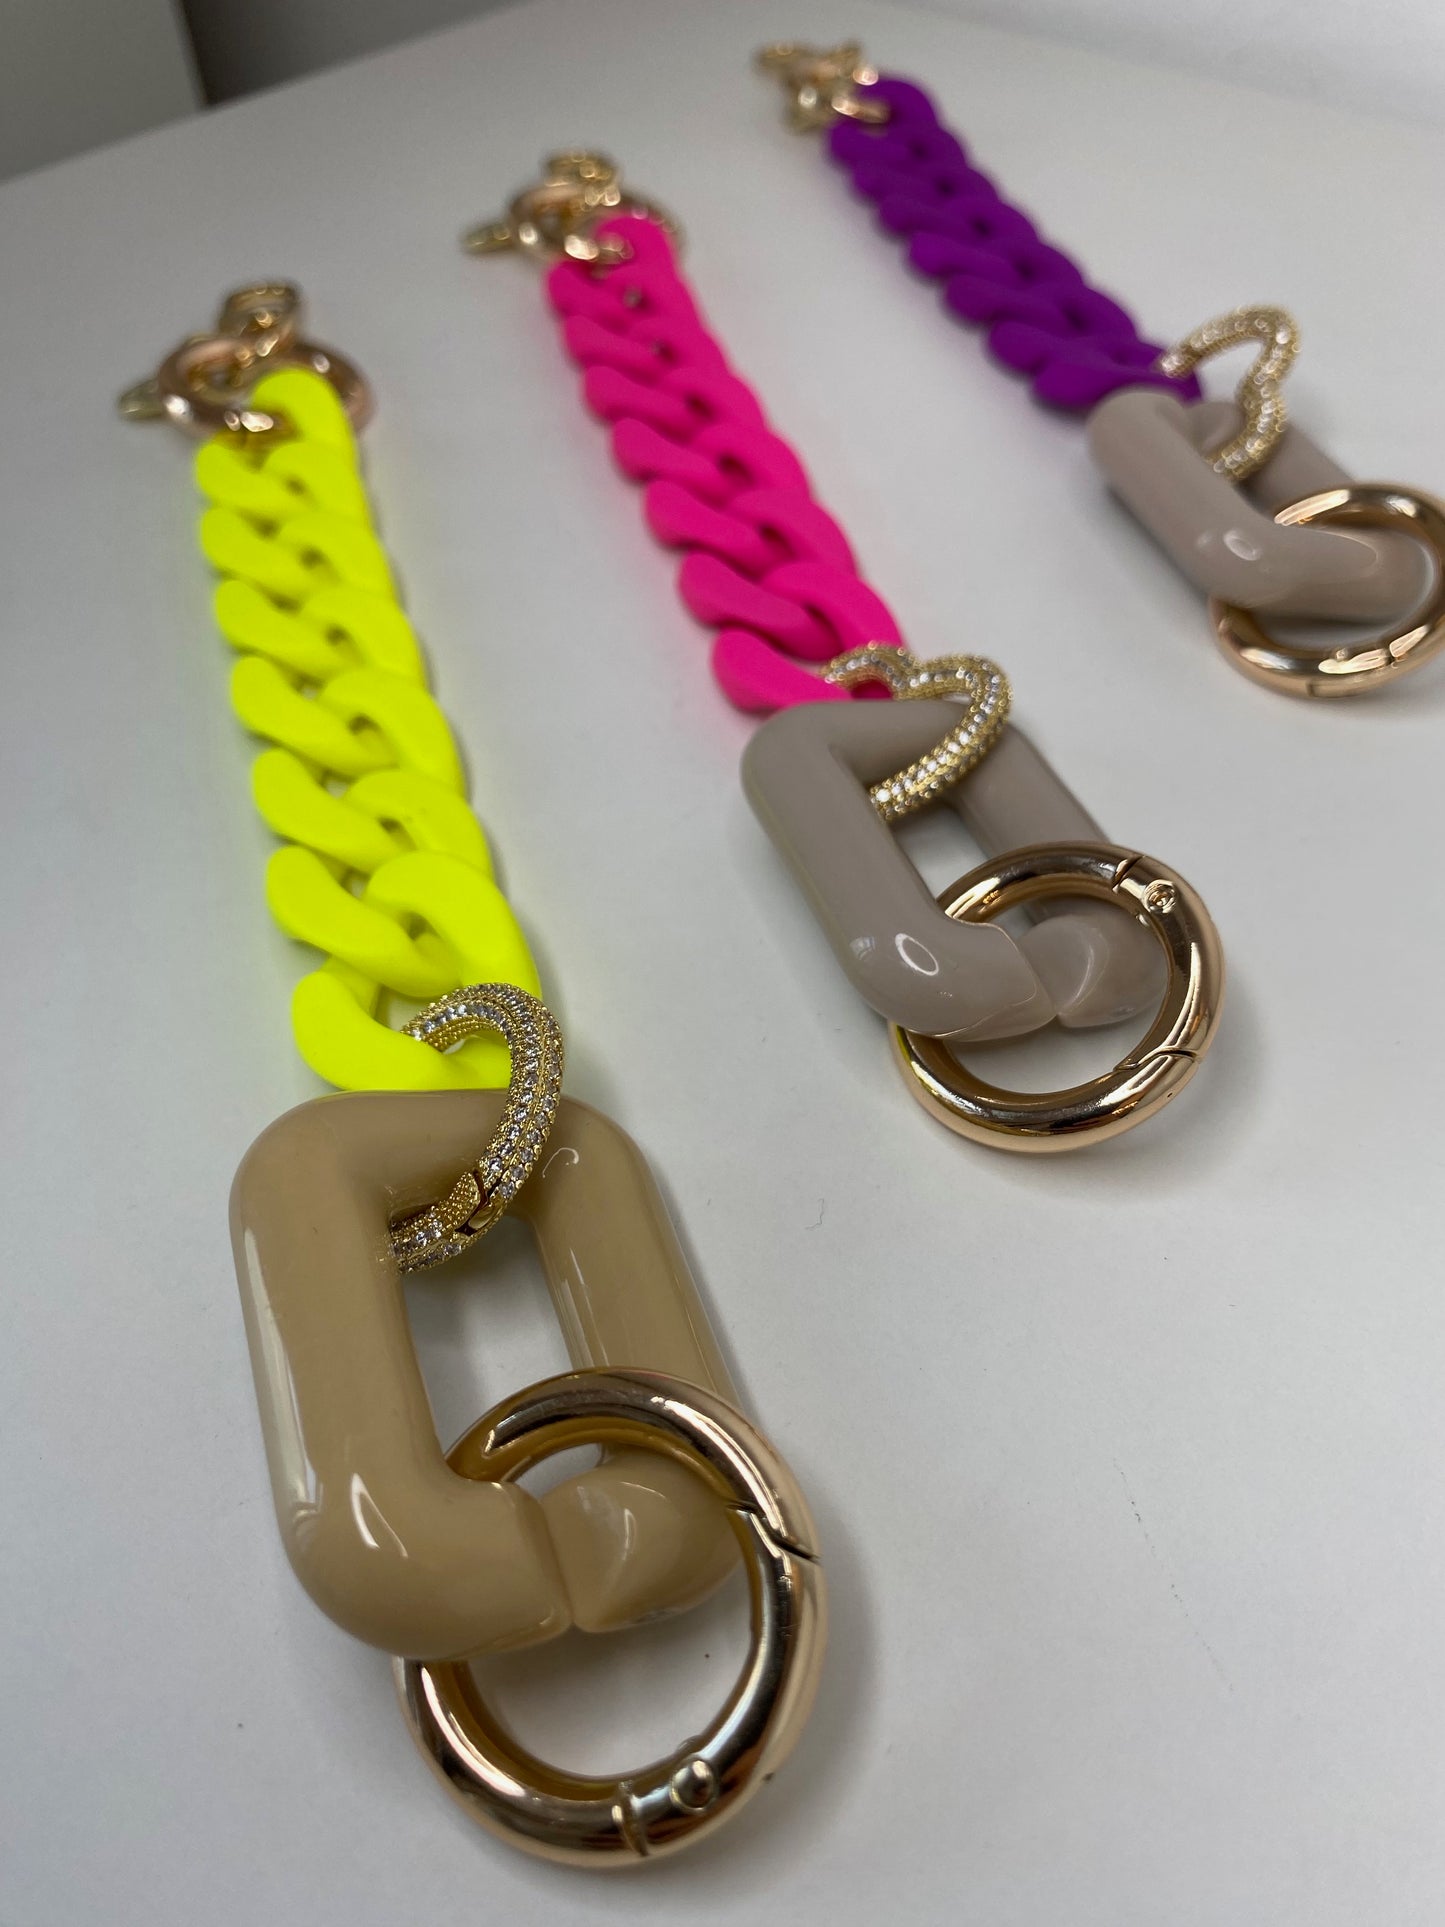 Original Bracelet Chain with Strass Yellow